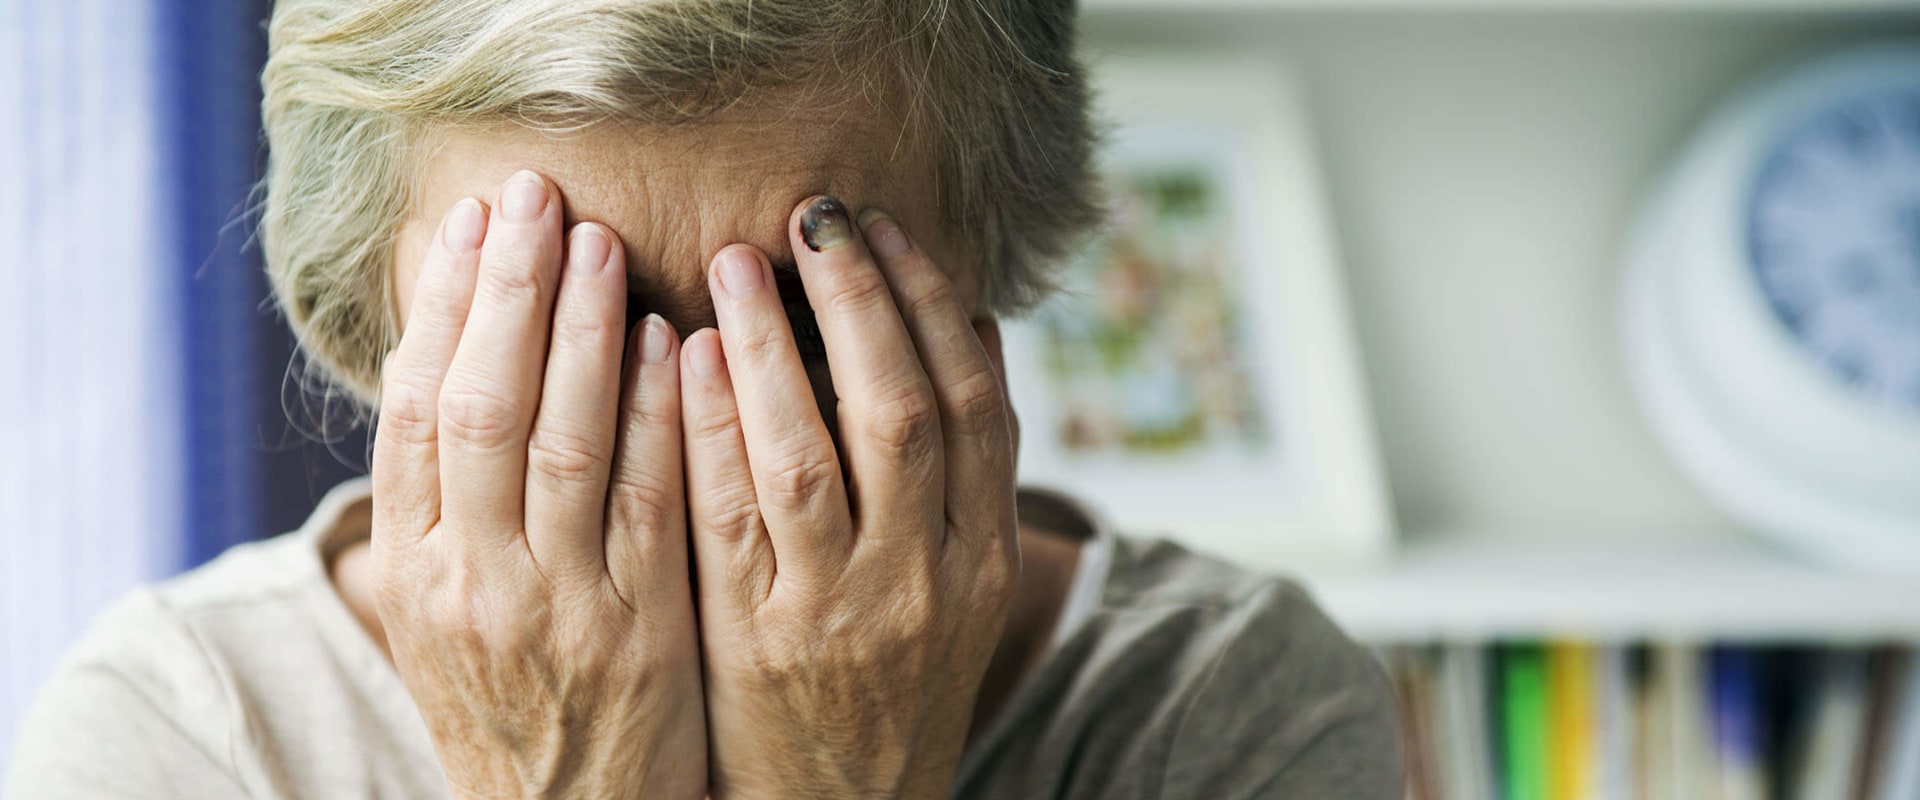 How widespread is elder abuse?